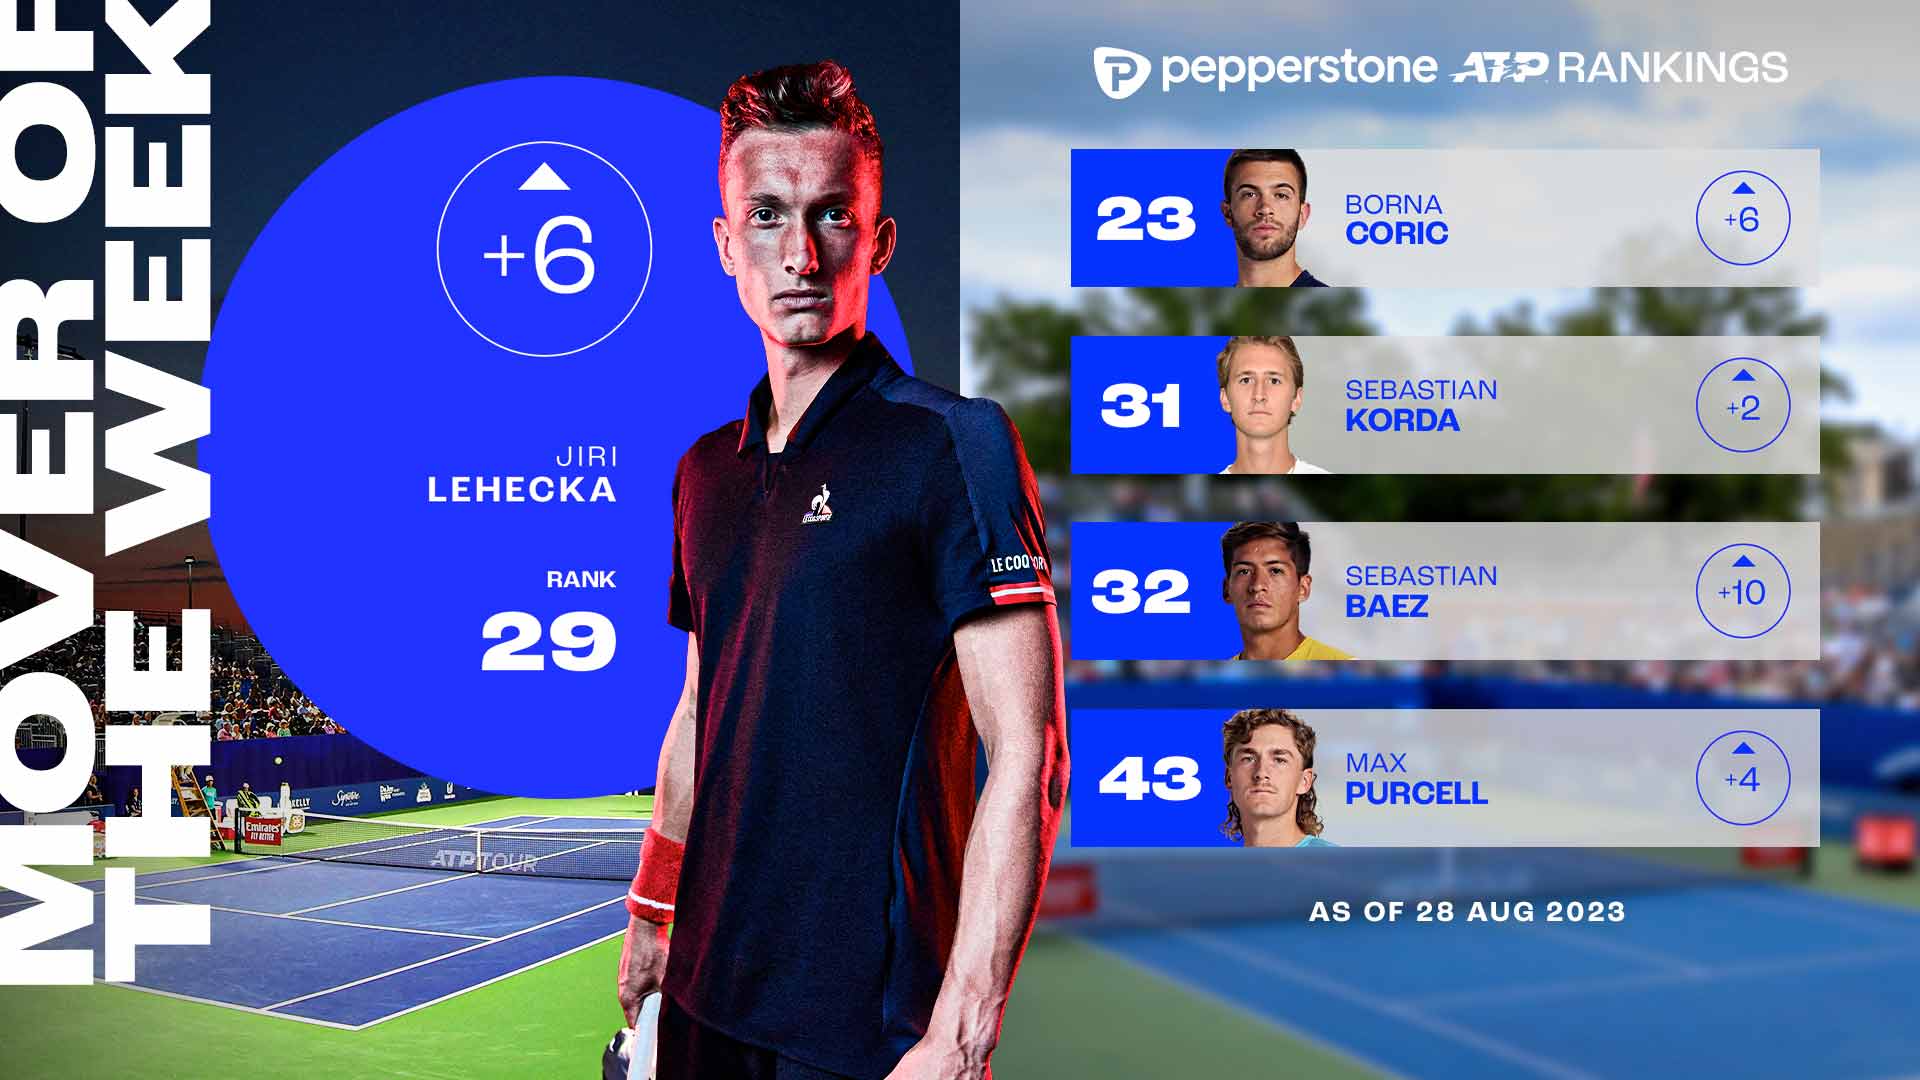 Lehecka Pepperstone ATP Rankings 28 August 2023, News Article, Winston-Salem Open